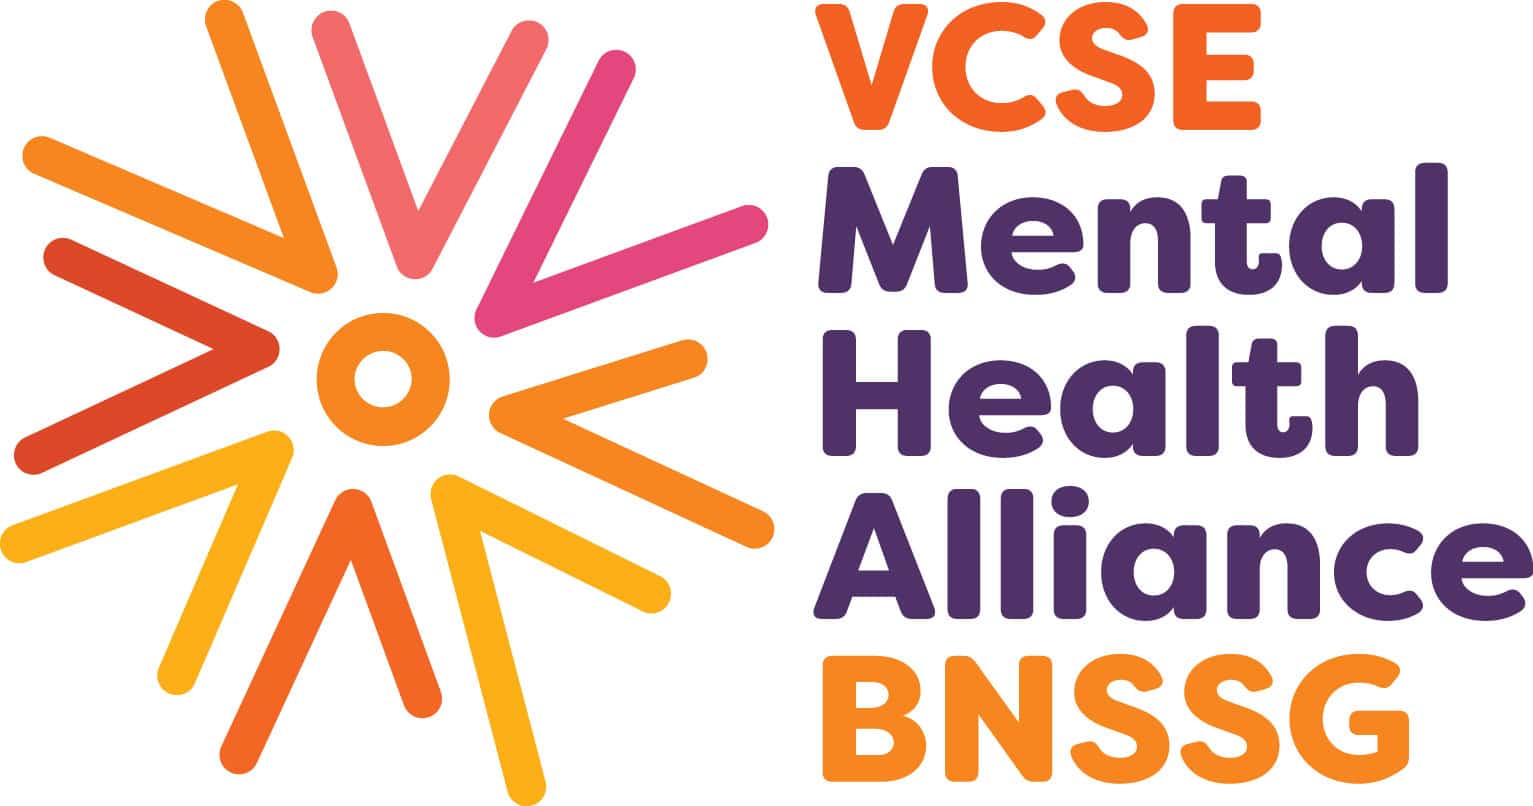 VCSE Mental Health Alliance BNSSG logo